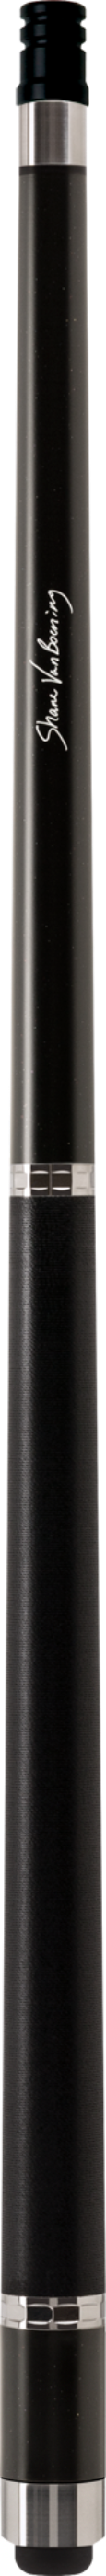 Cynergy Black Sparkle SVB - 11.8 or 12.5 mm -Cuetec